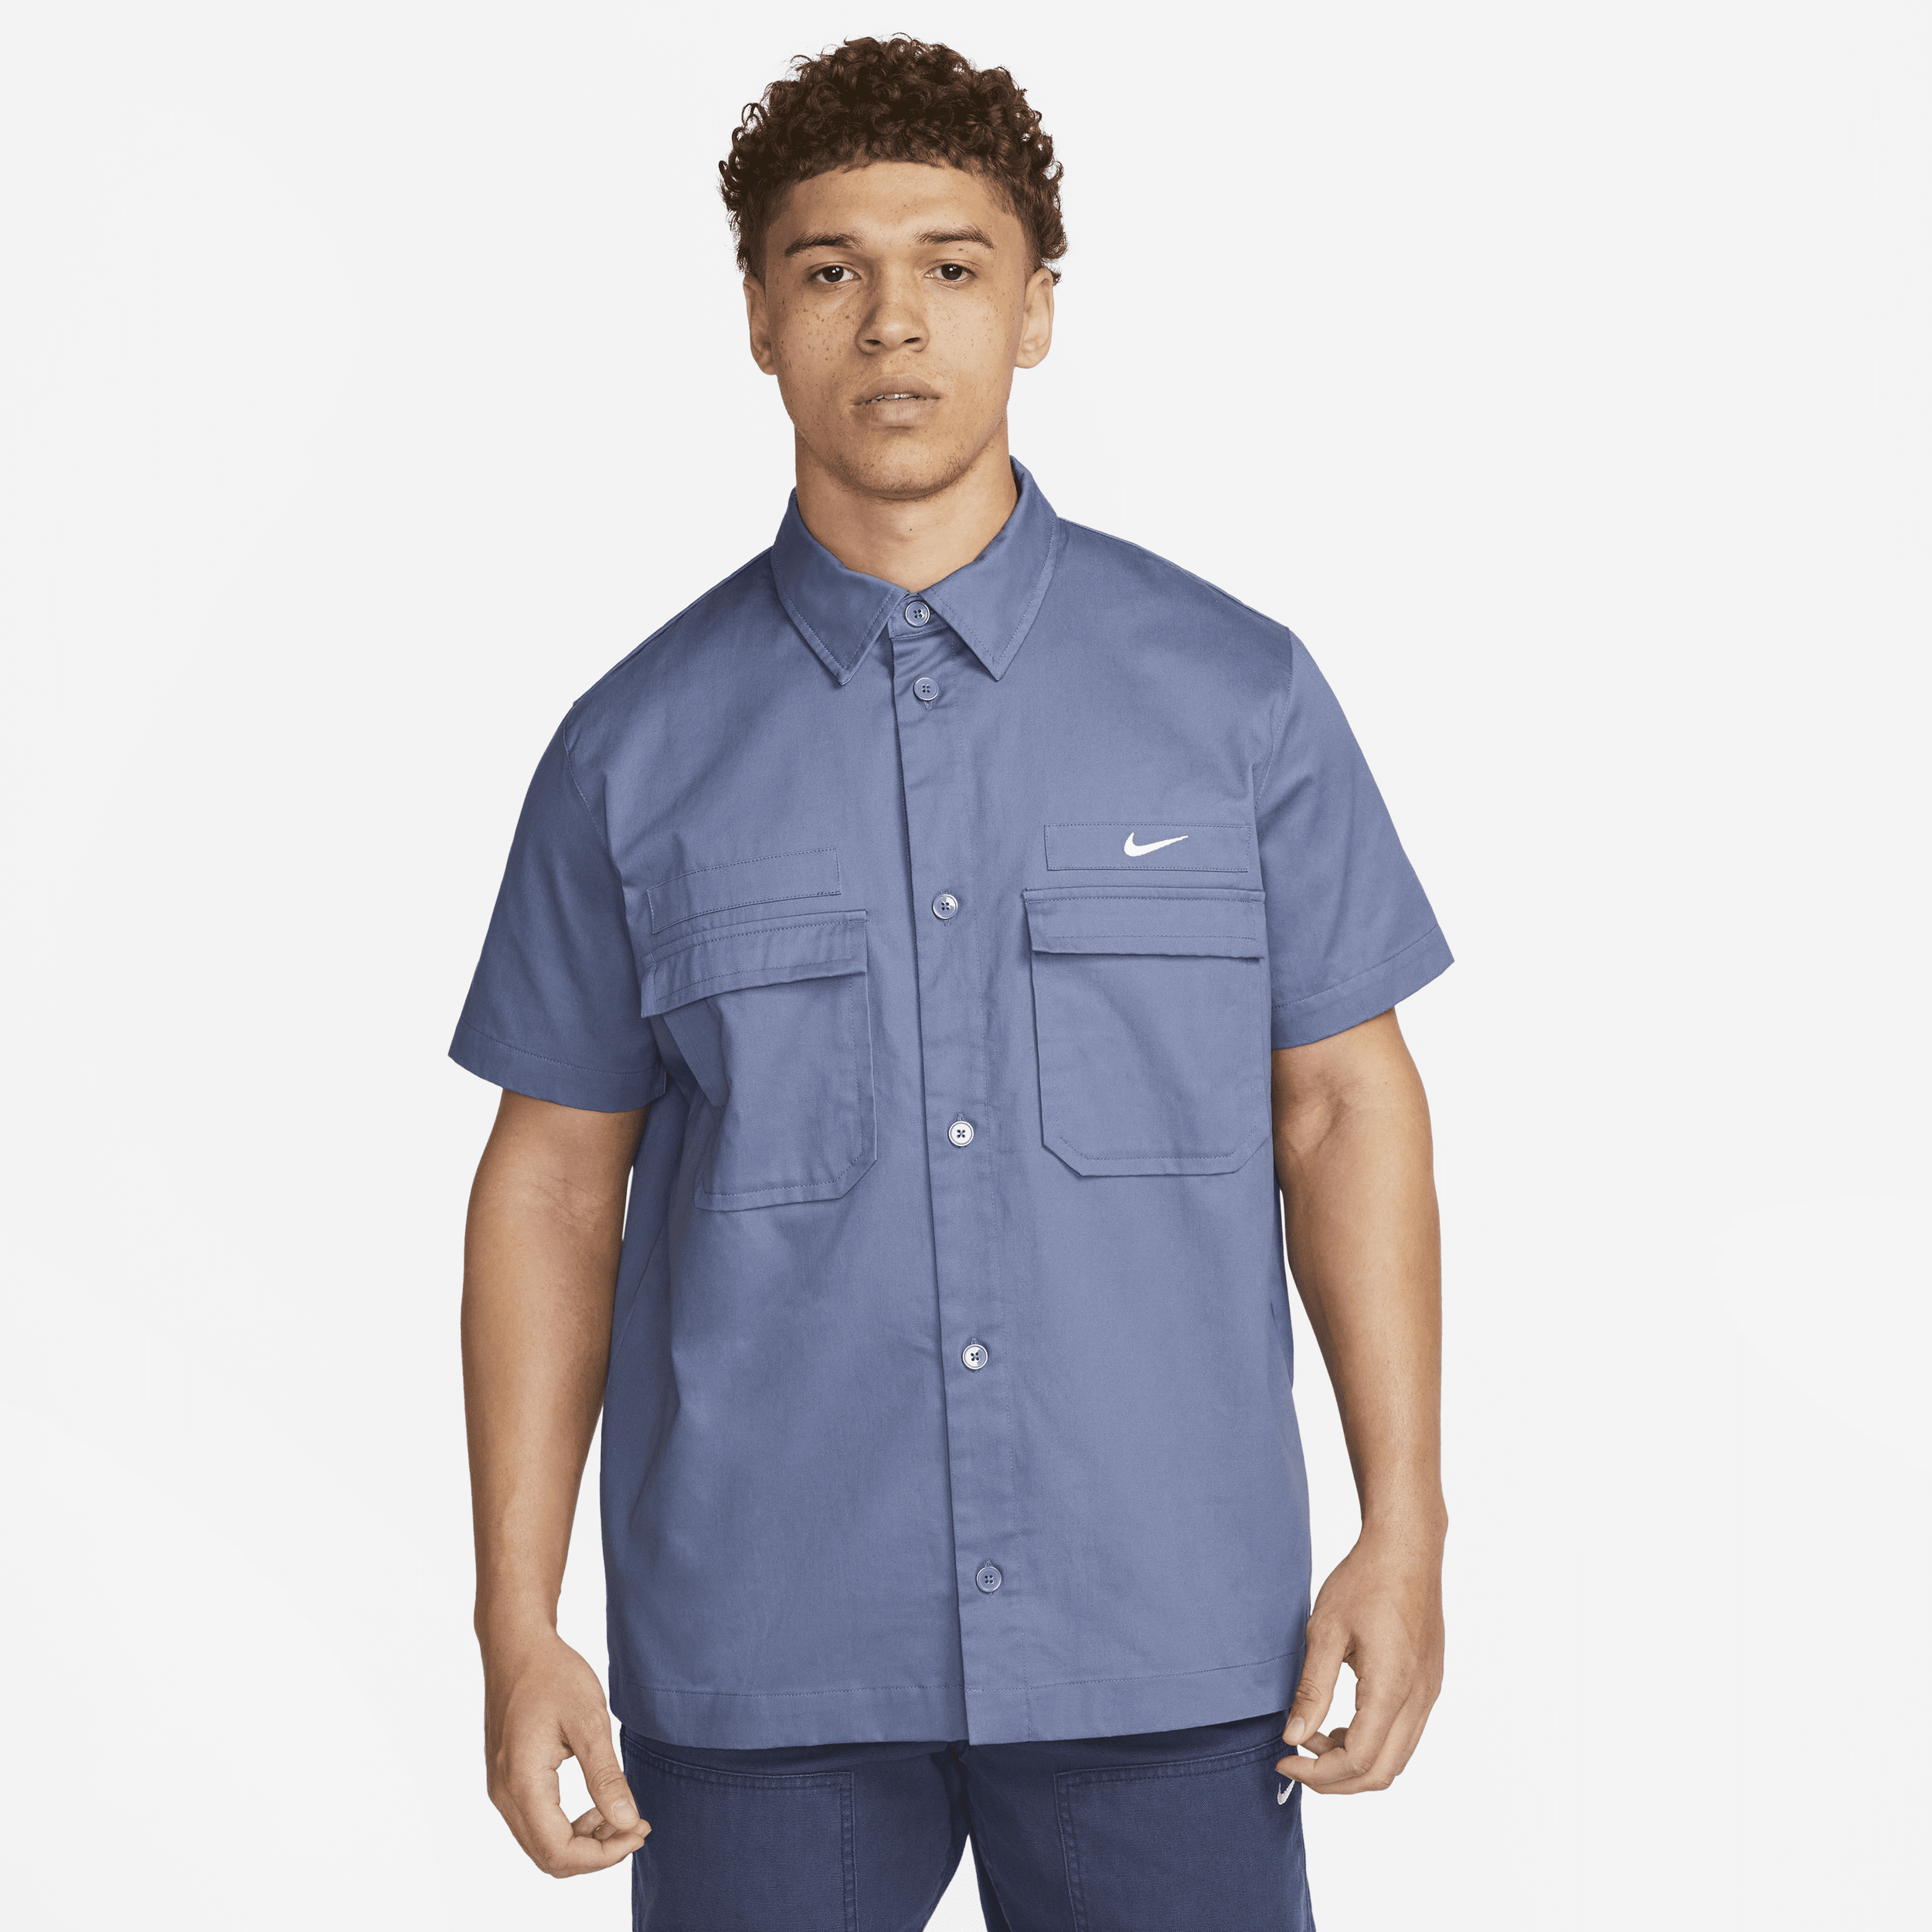 Nike Life Men's Woven Military Short-Sleeve Button-Down Shirt.